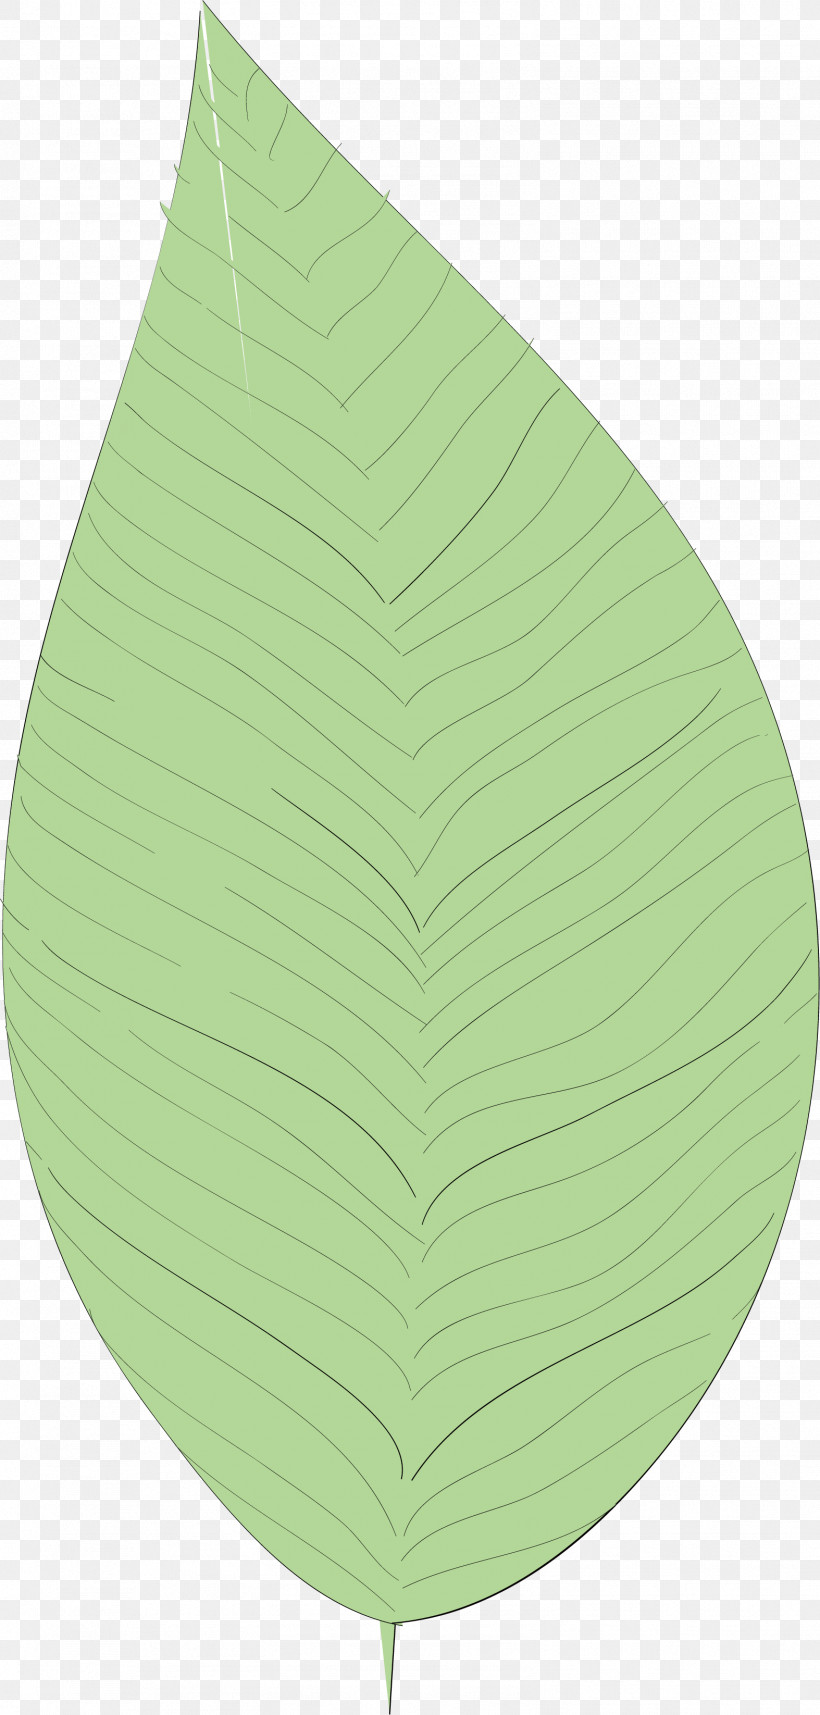 Simple Leaf Simple Leaf Drawing Simple Leaf Outline, PNG, 1574x3292px, Simple Leaf, Biology, Green, Leaf, Plant Structure Download Free